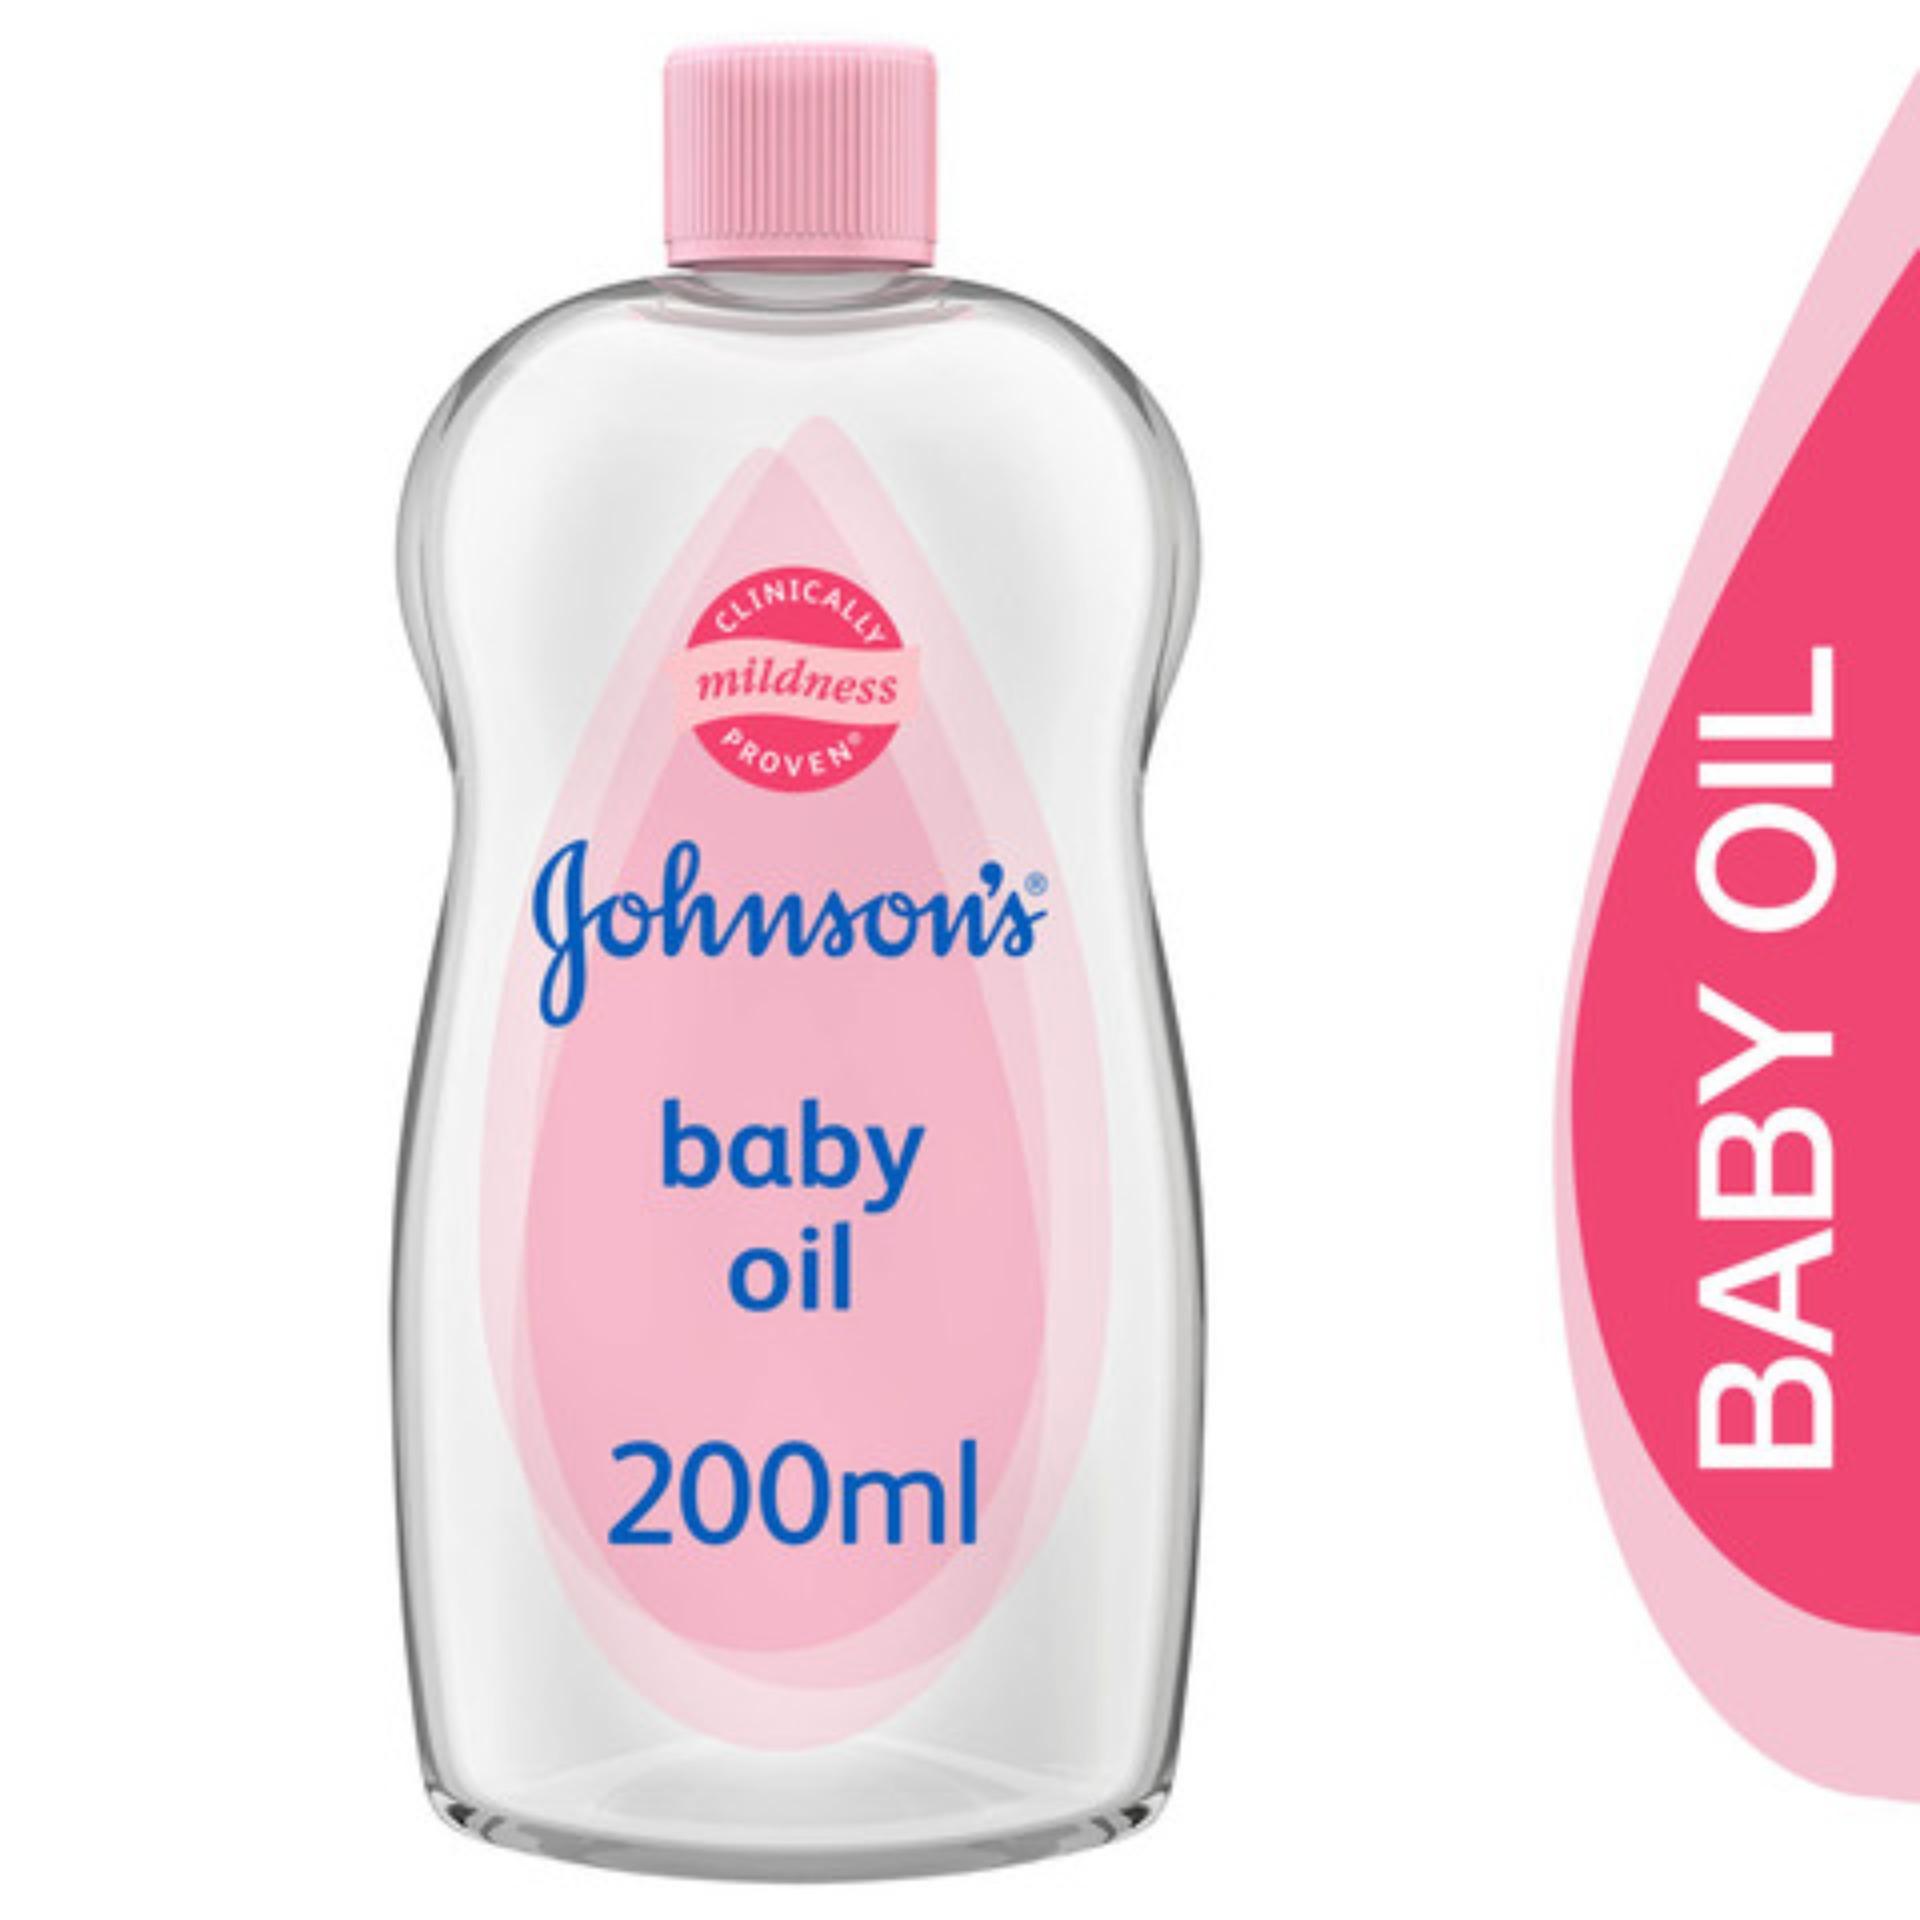 Масло для детей цена. Johnson's Baby масло детское, 200 мл. Johnson's Baby детское масло, 300 мл. Джонсонс бэби масло Oil. Масло джонсонс Беби 300 мл.